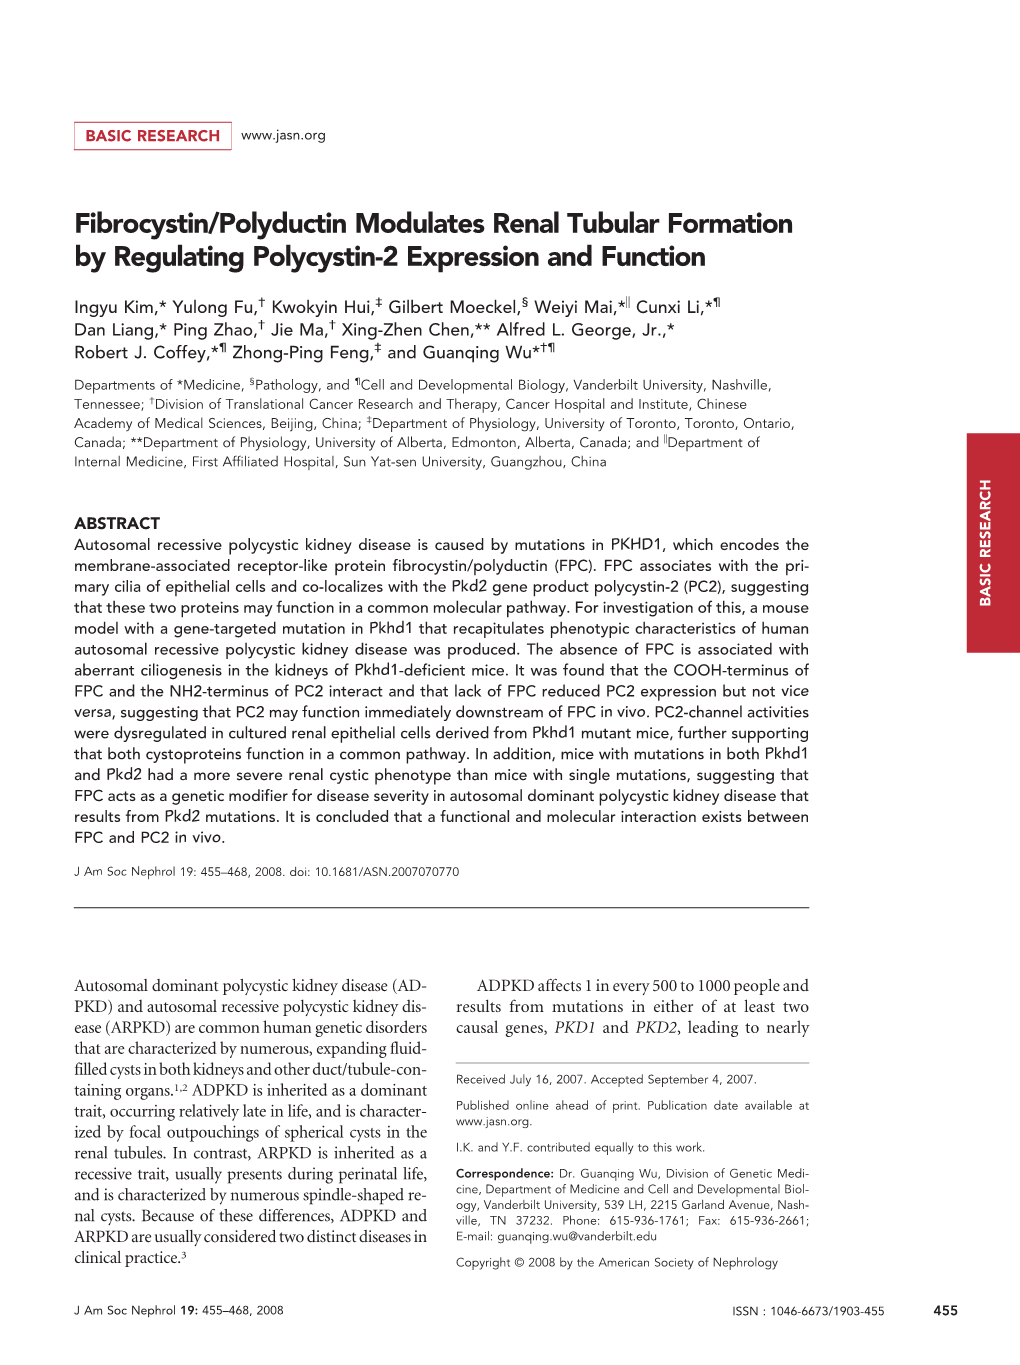 Fibrocystin/Polyductin Modulates Renal Tubular Formation by Regulating Polycystin-2 Expression and Function